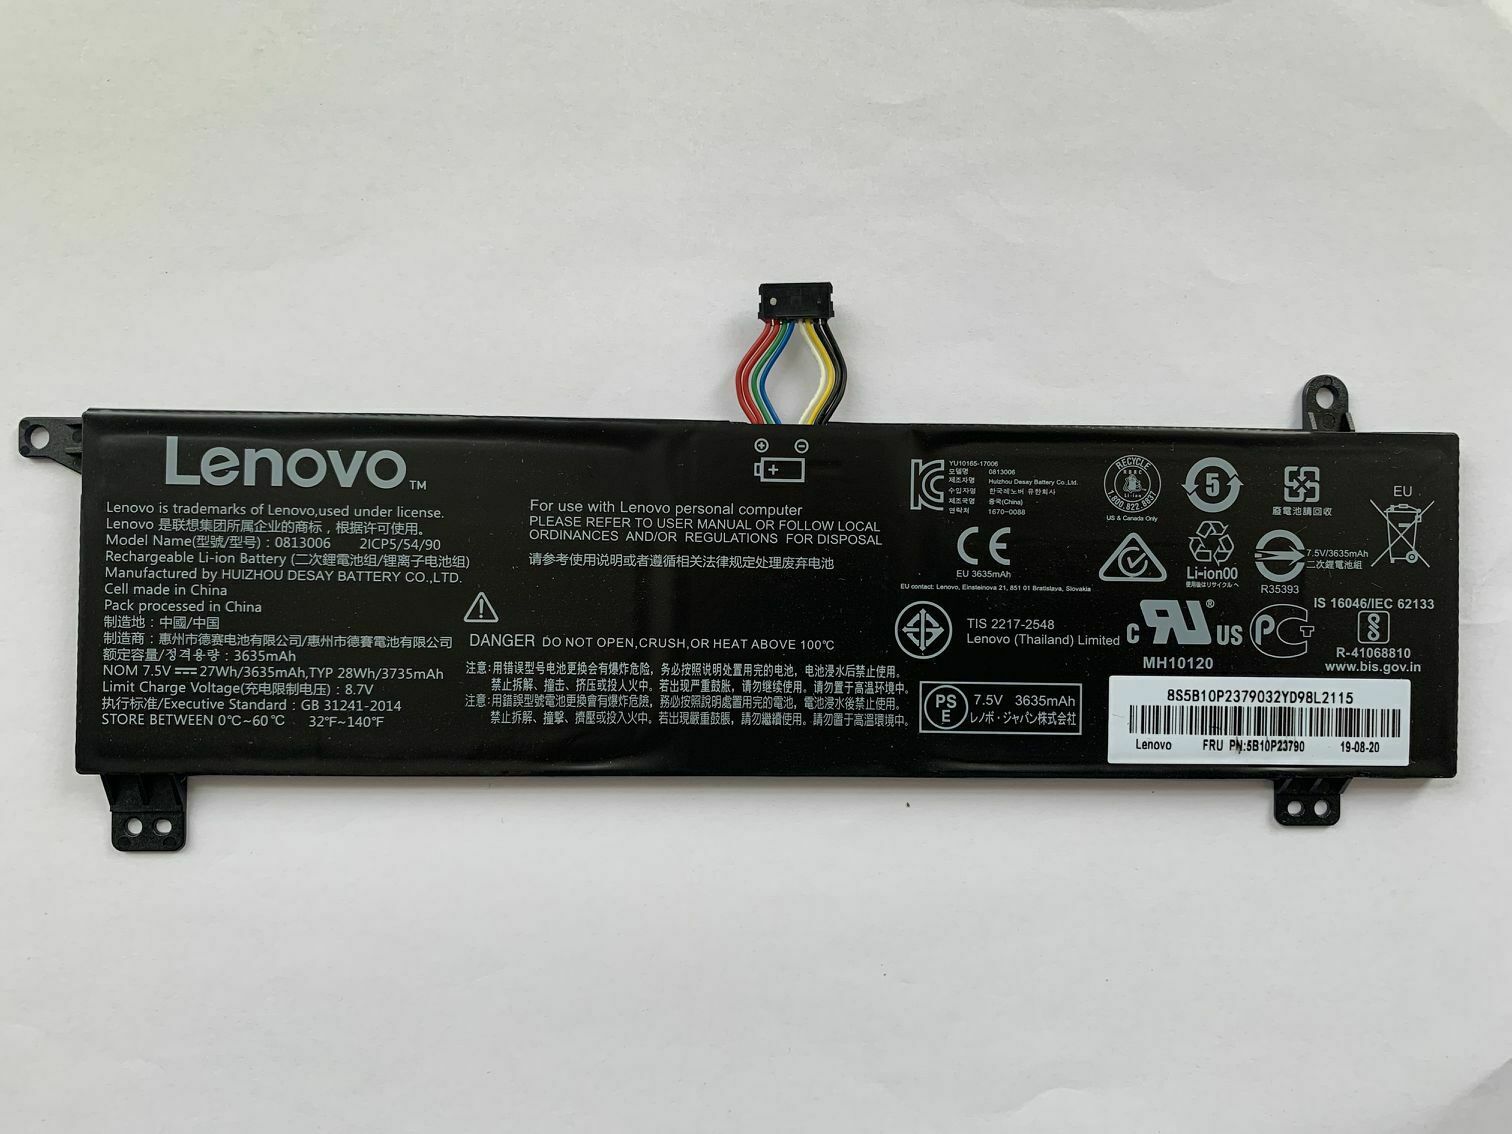 Genuine Lenovo IdeaPad 120S-11IAP(81A4005XGE), IdeaPad 120S-11IAP(81A40060GE) 0813006, BSNO485490 Laptop Battery - eBuy UAE